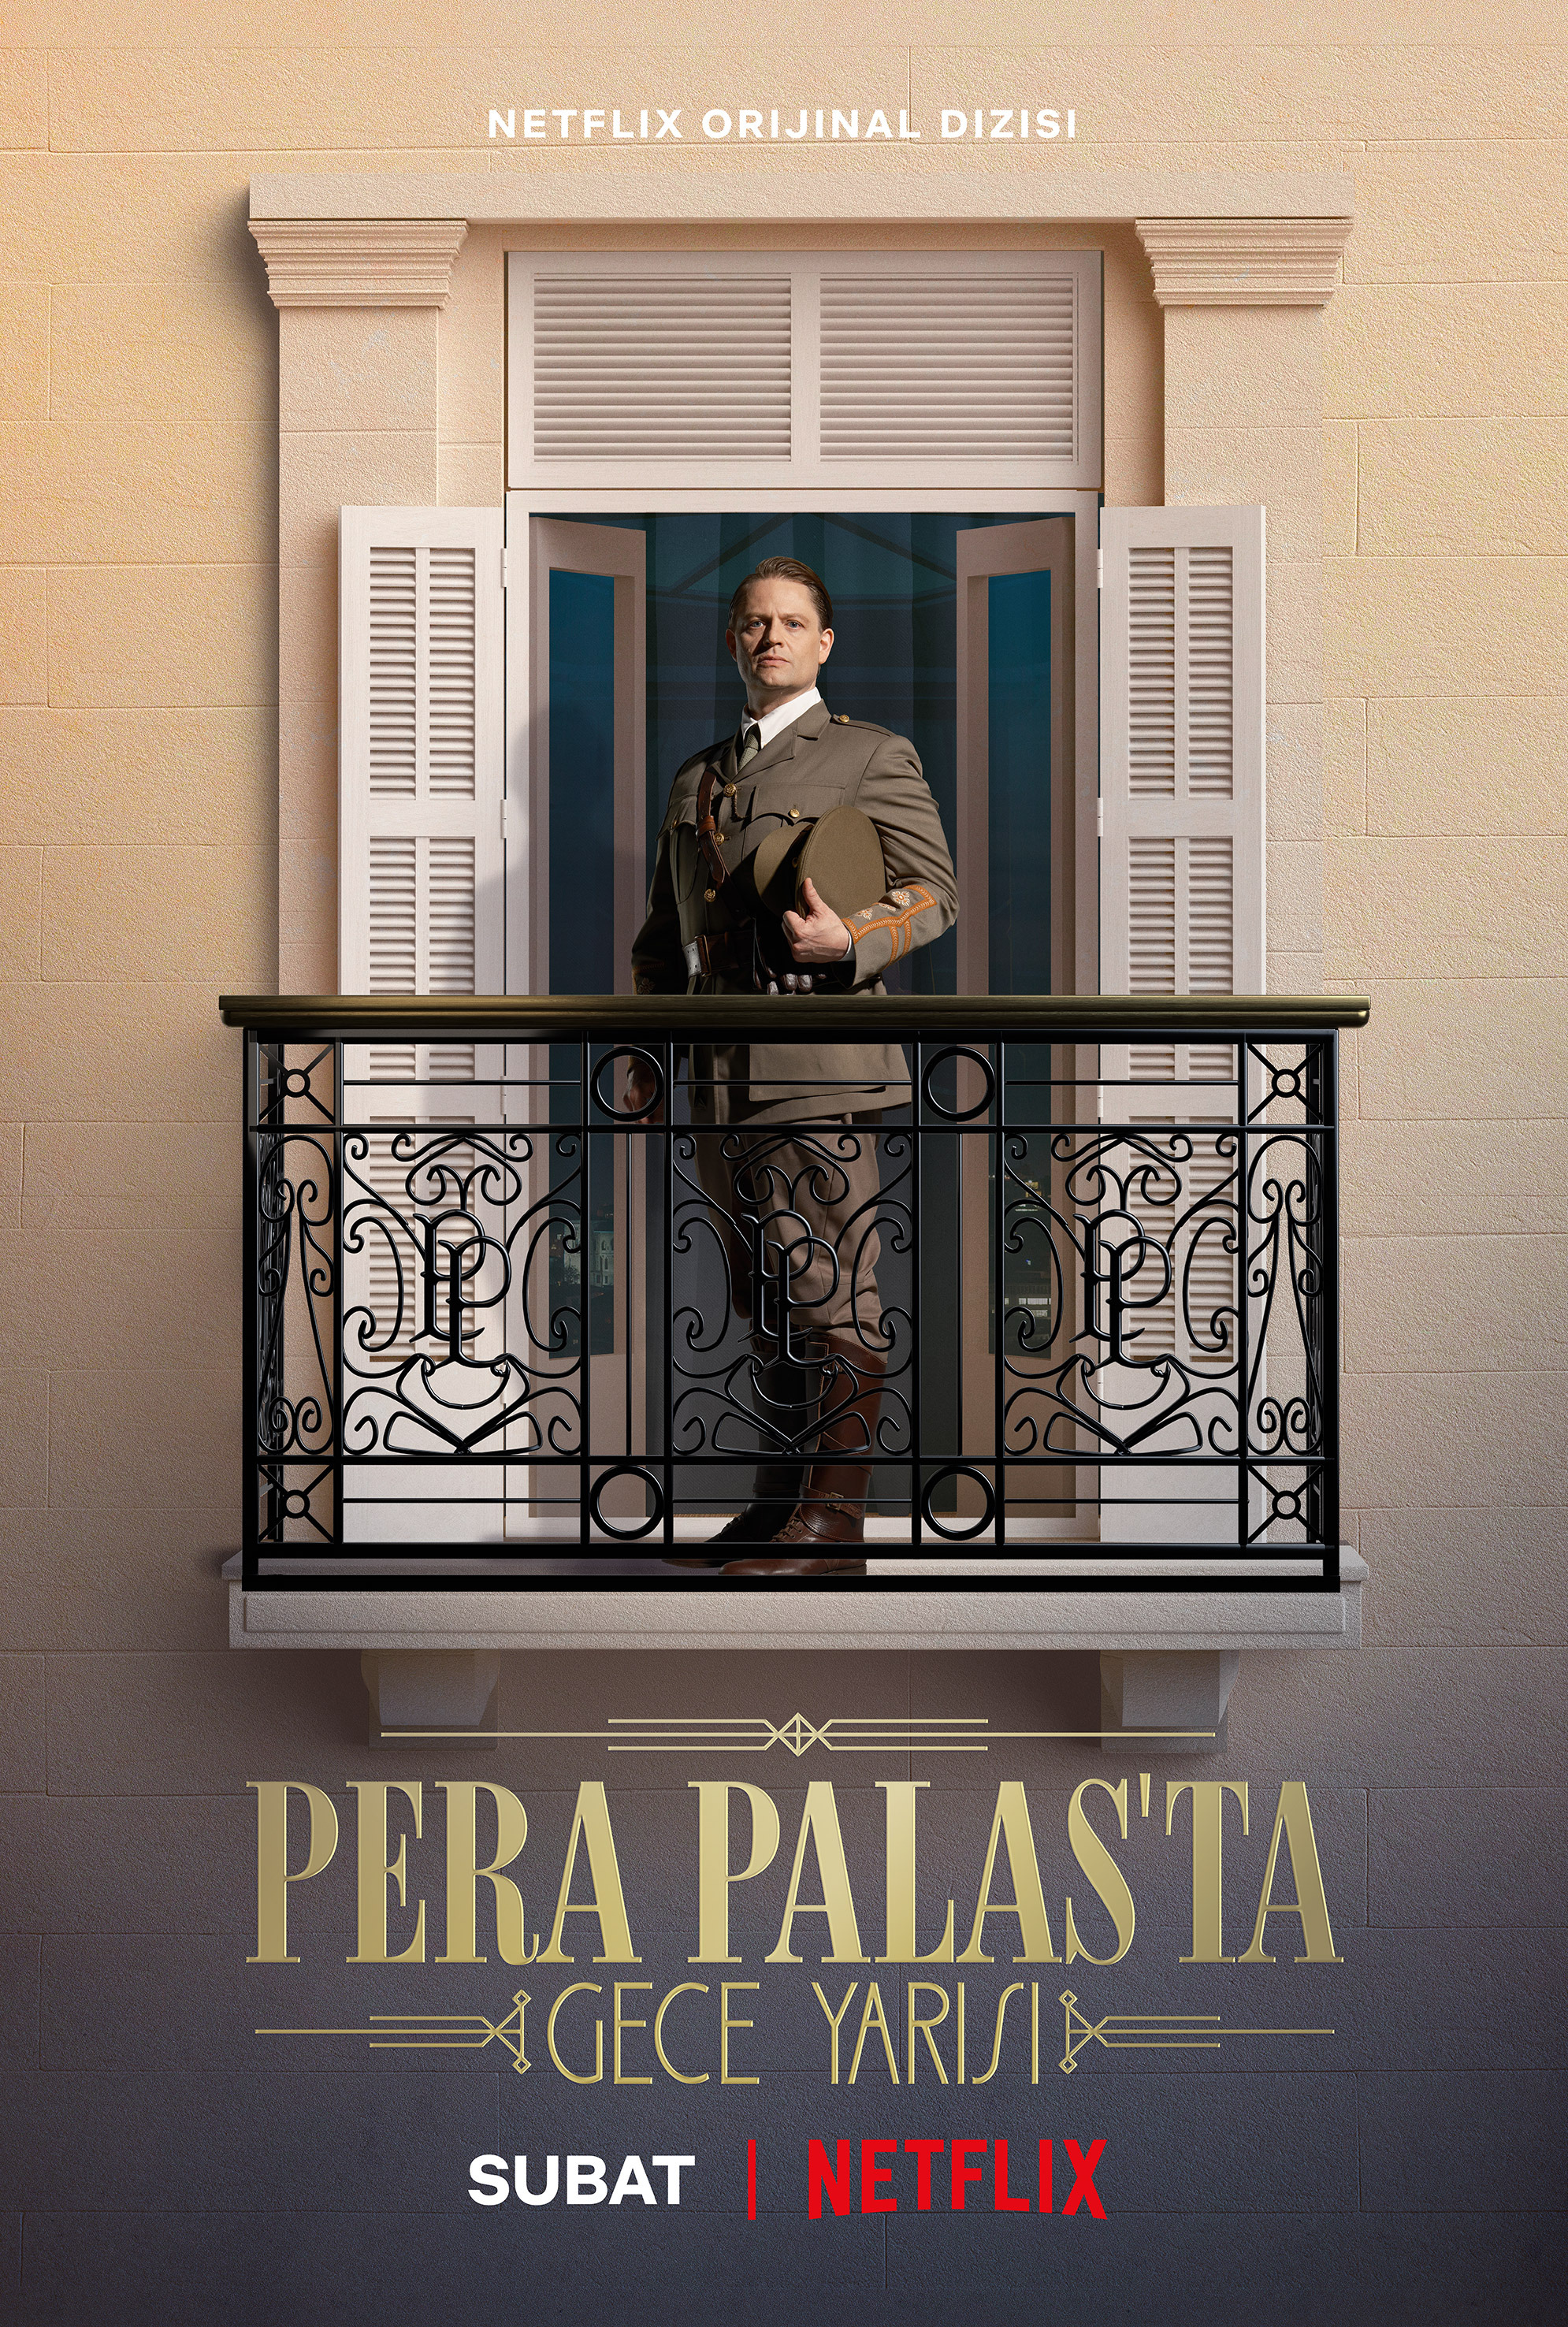 Mega Sized TV Poster Image for Pera Palas'ta Gece Yarisi (#6 of 10)